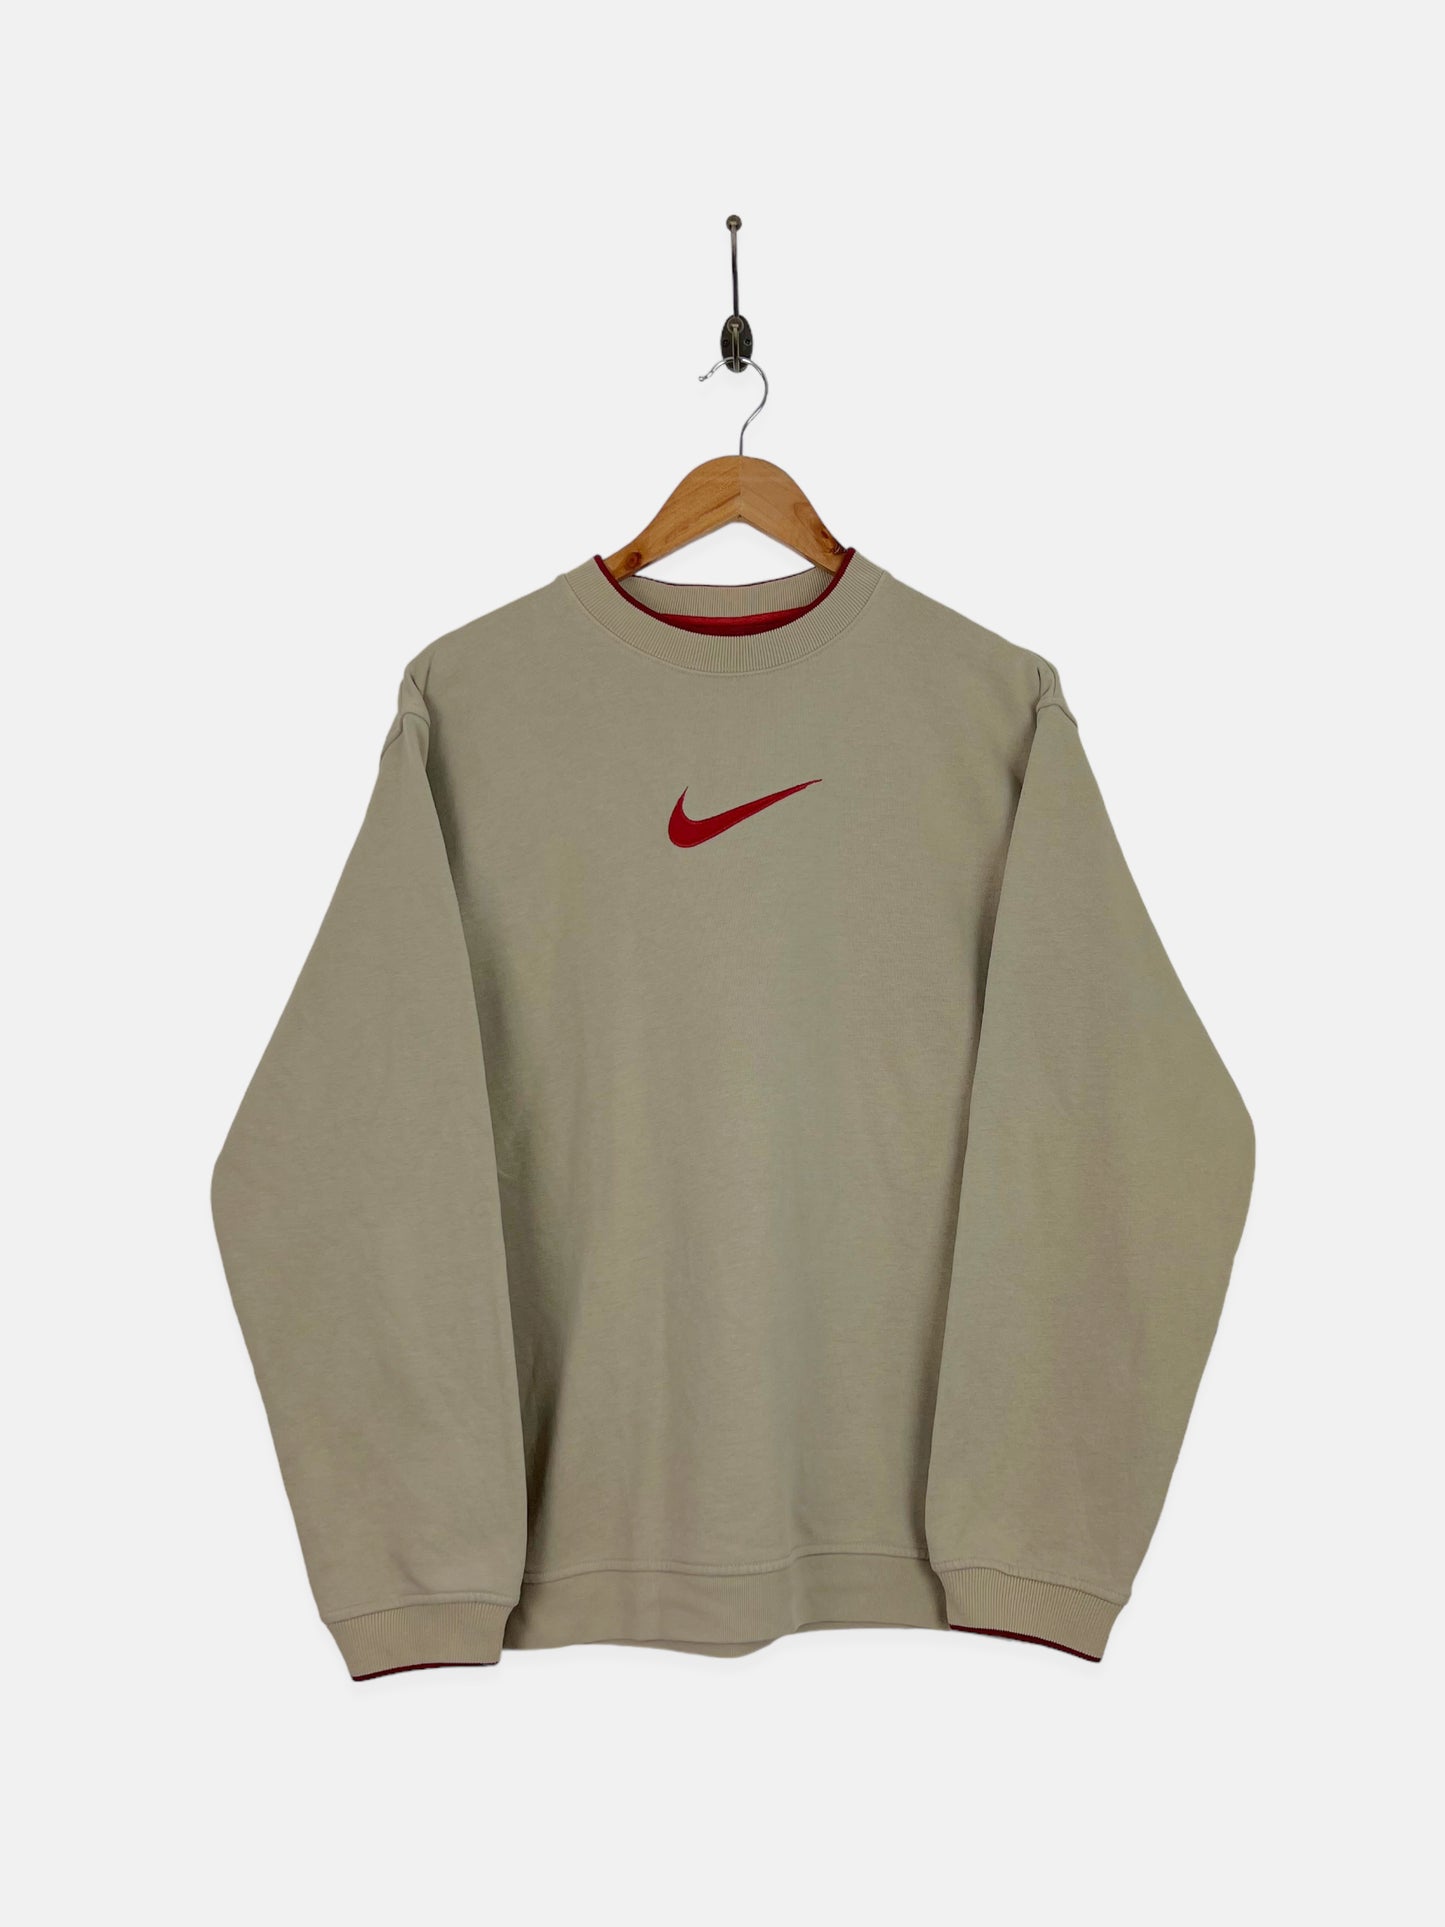 90's Nike Embroidered Vintage Sweatshirt Size 10-12